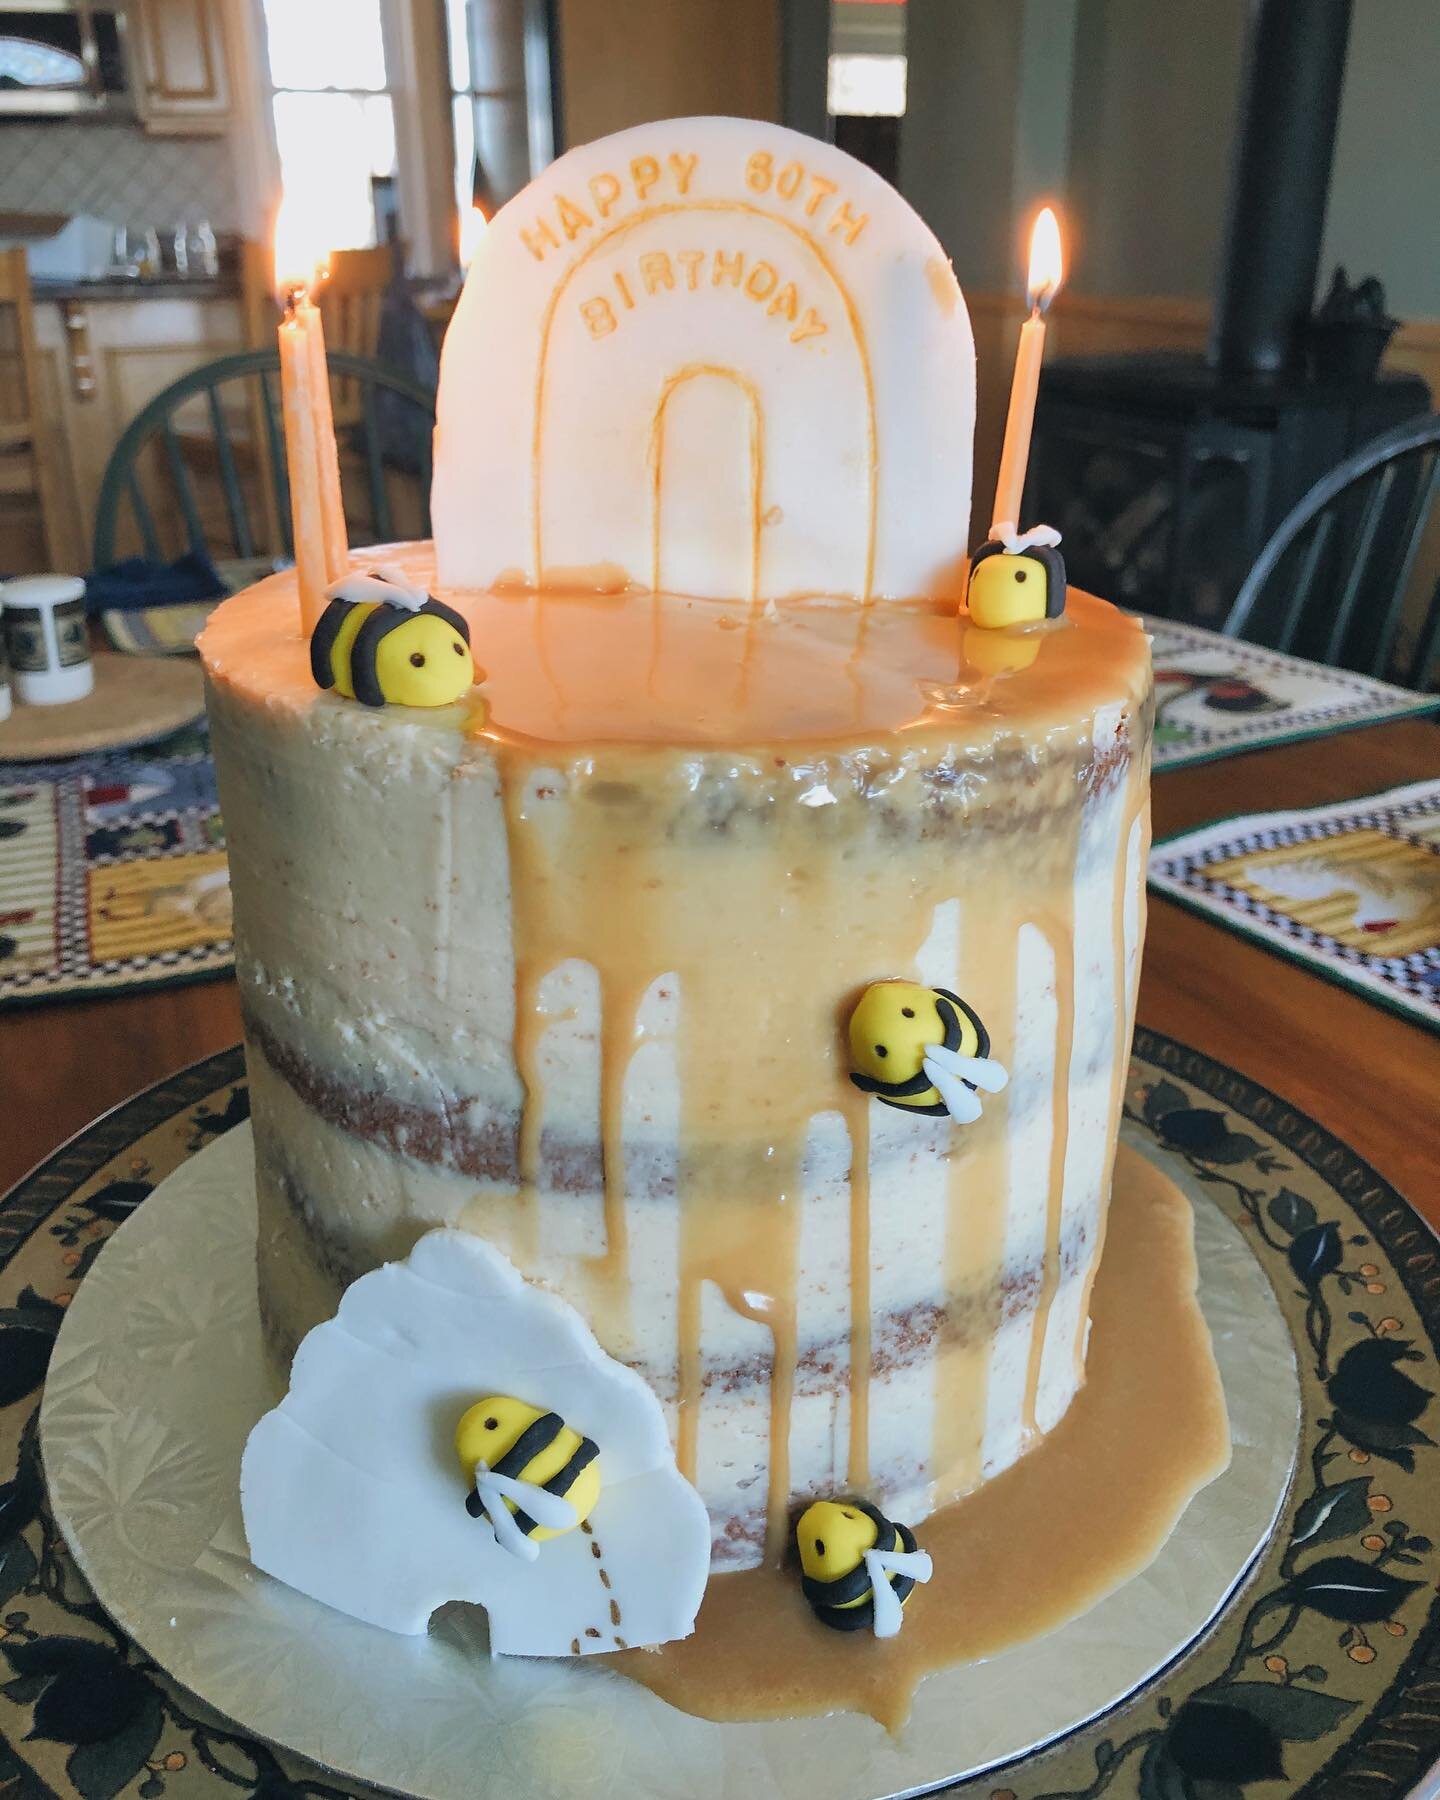 Beautifully made bee cake, thank you @kreskykimberly 🐝.